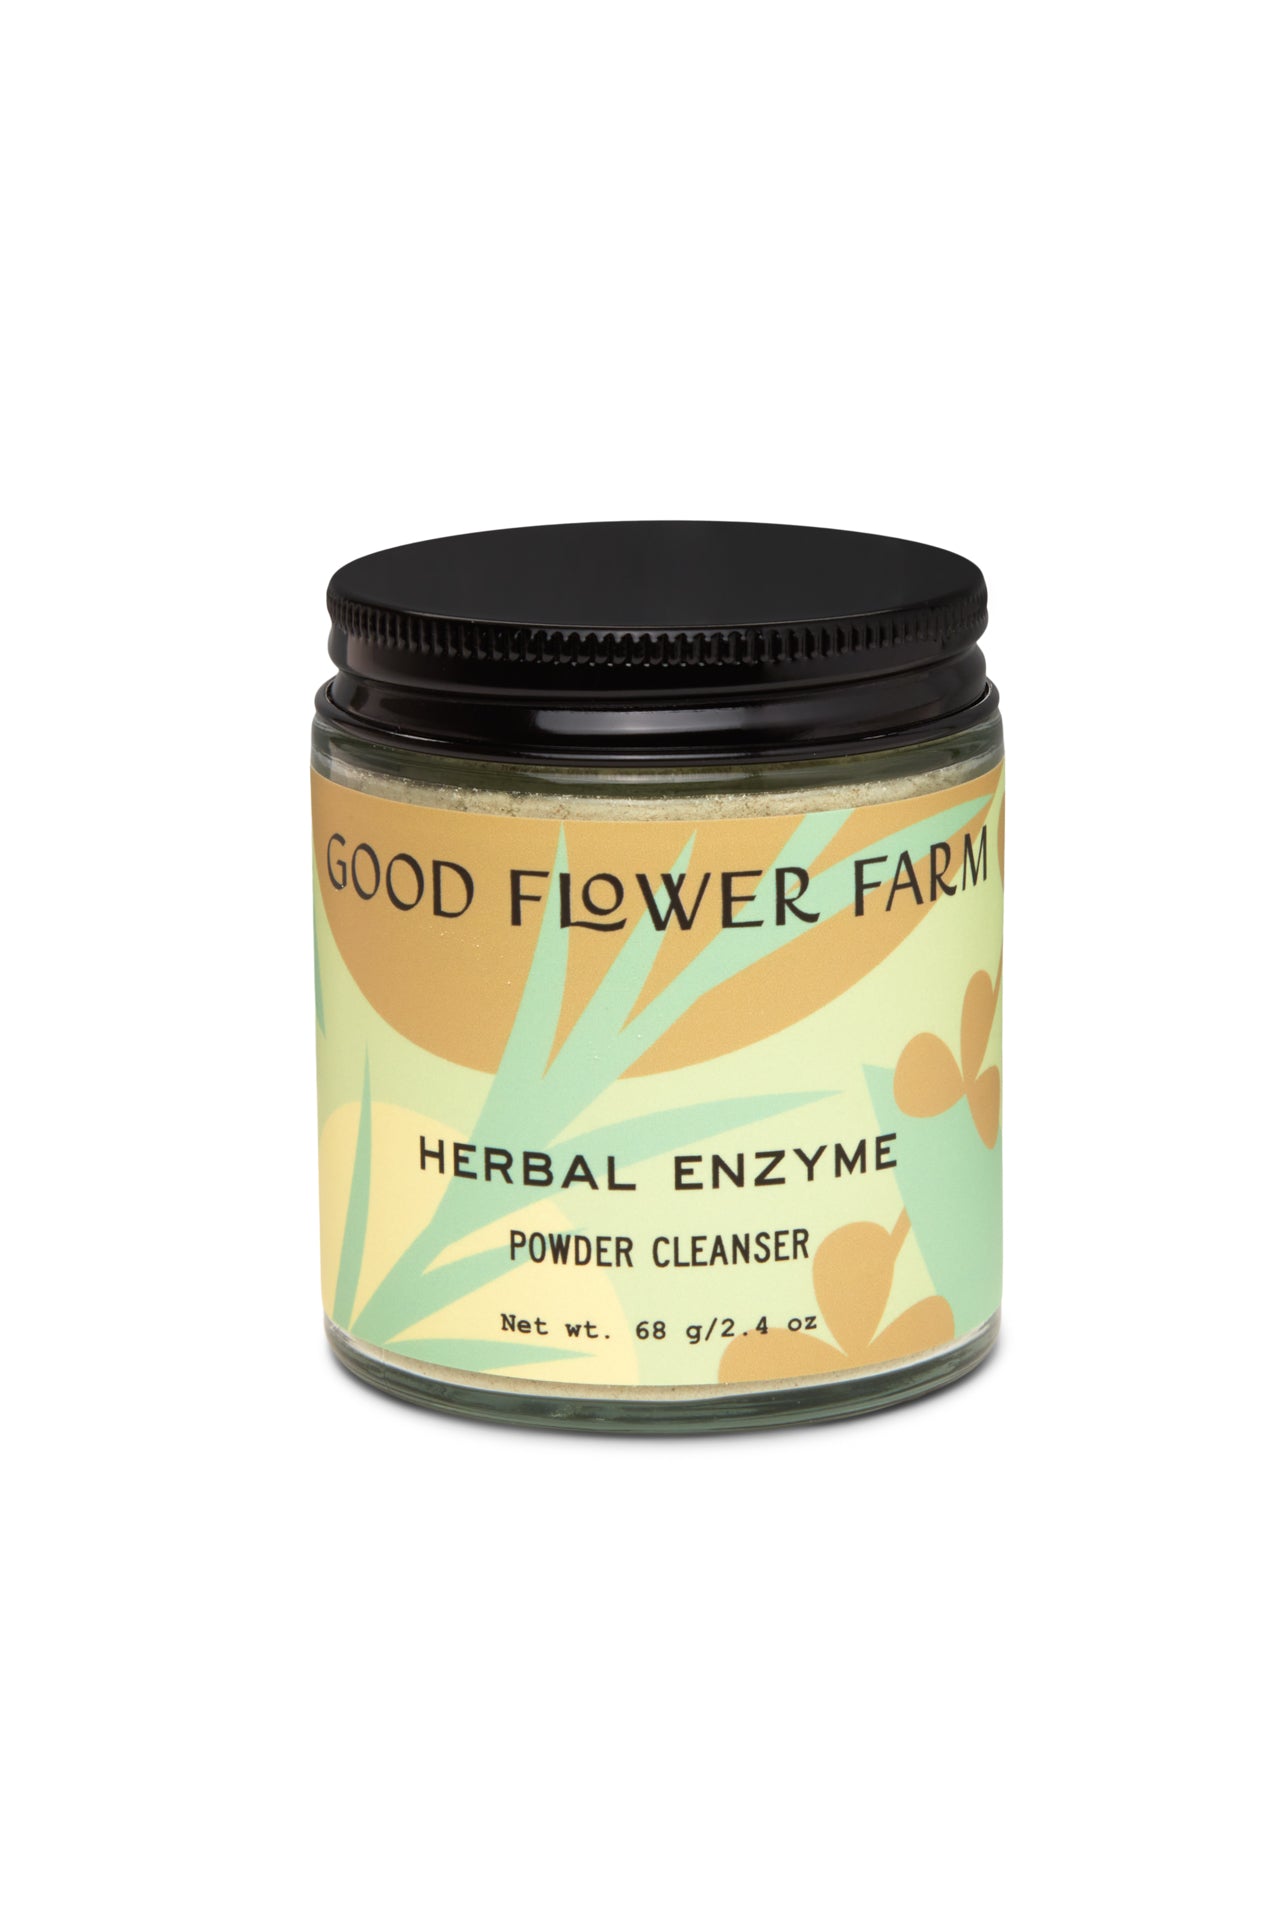 Herbal Enzyme Powder Cleanser by Good Flower Farm